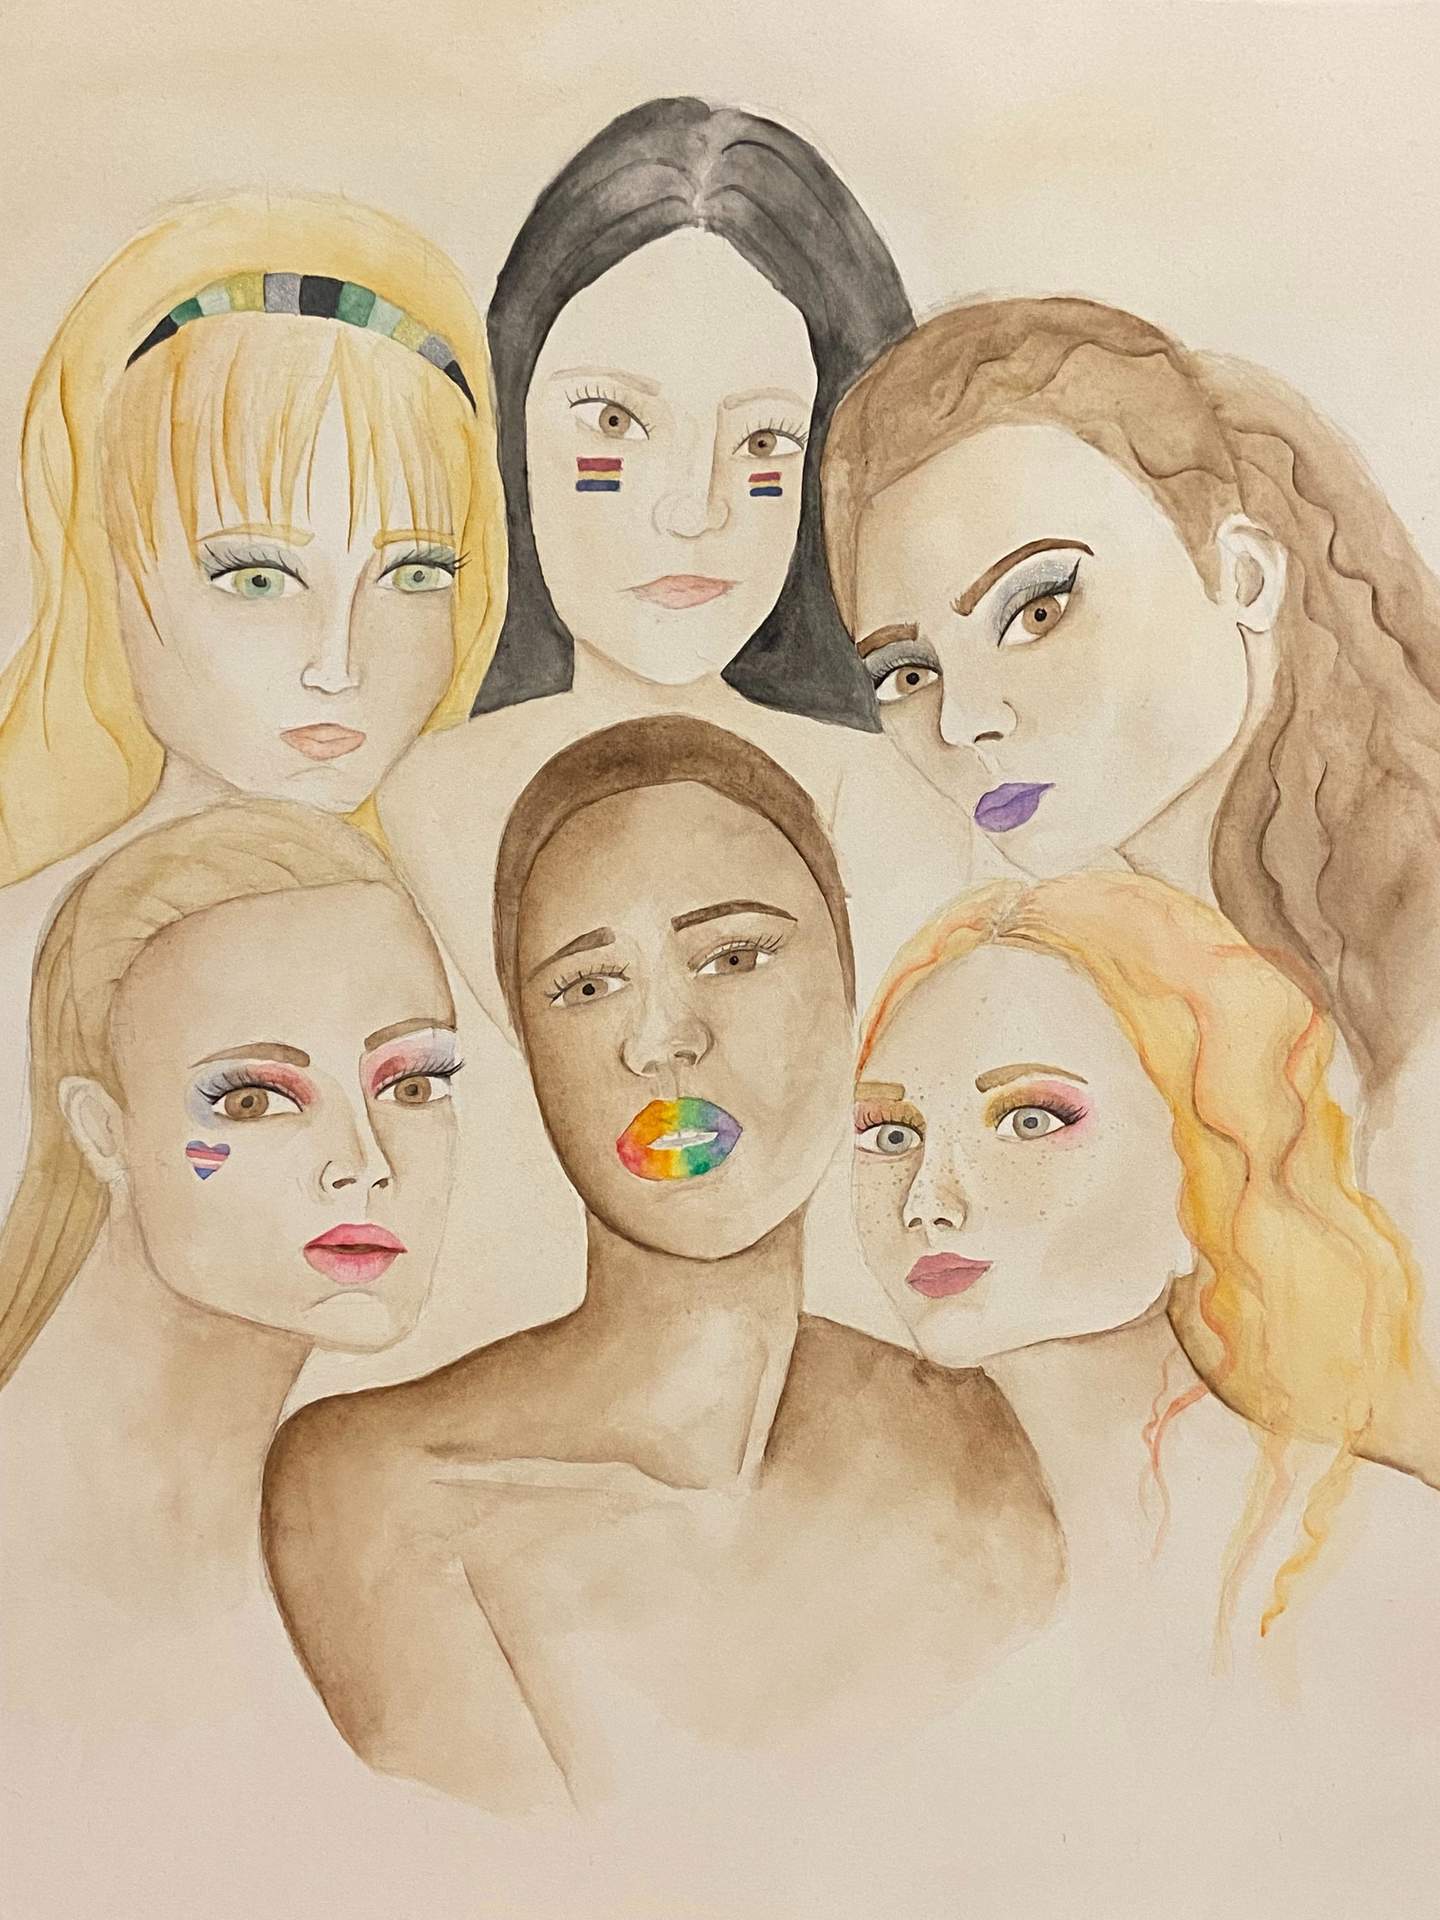 Pencil drawing of 6 women